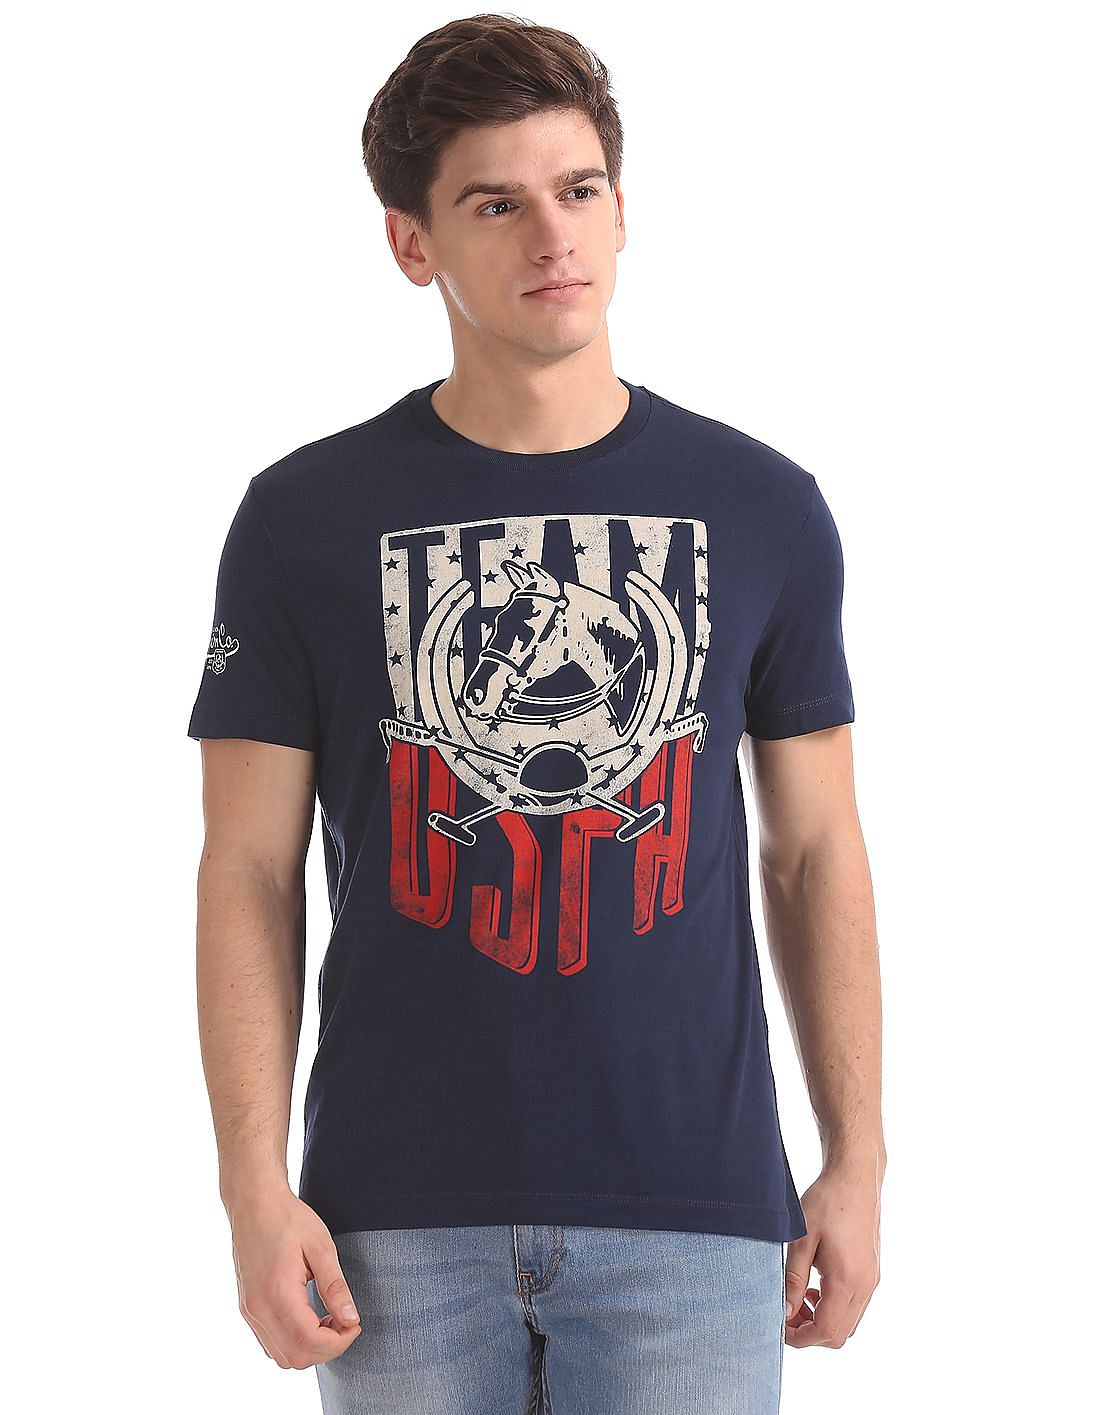 Buy U.S. Polo Assn. Denim Co. Men Muscle Fit Graphic T-Shirt - NNNOW.com